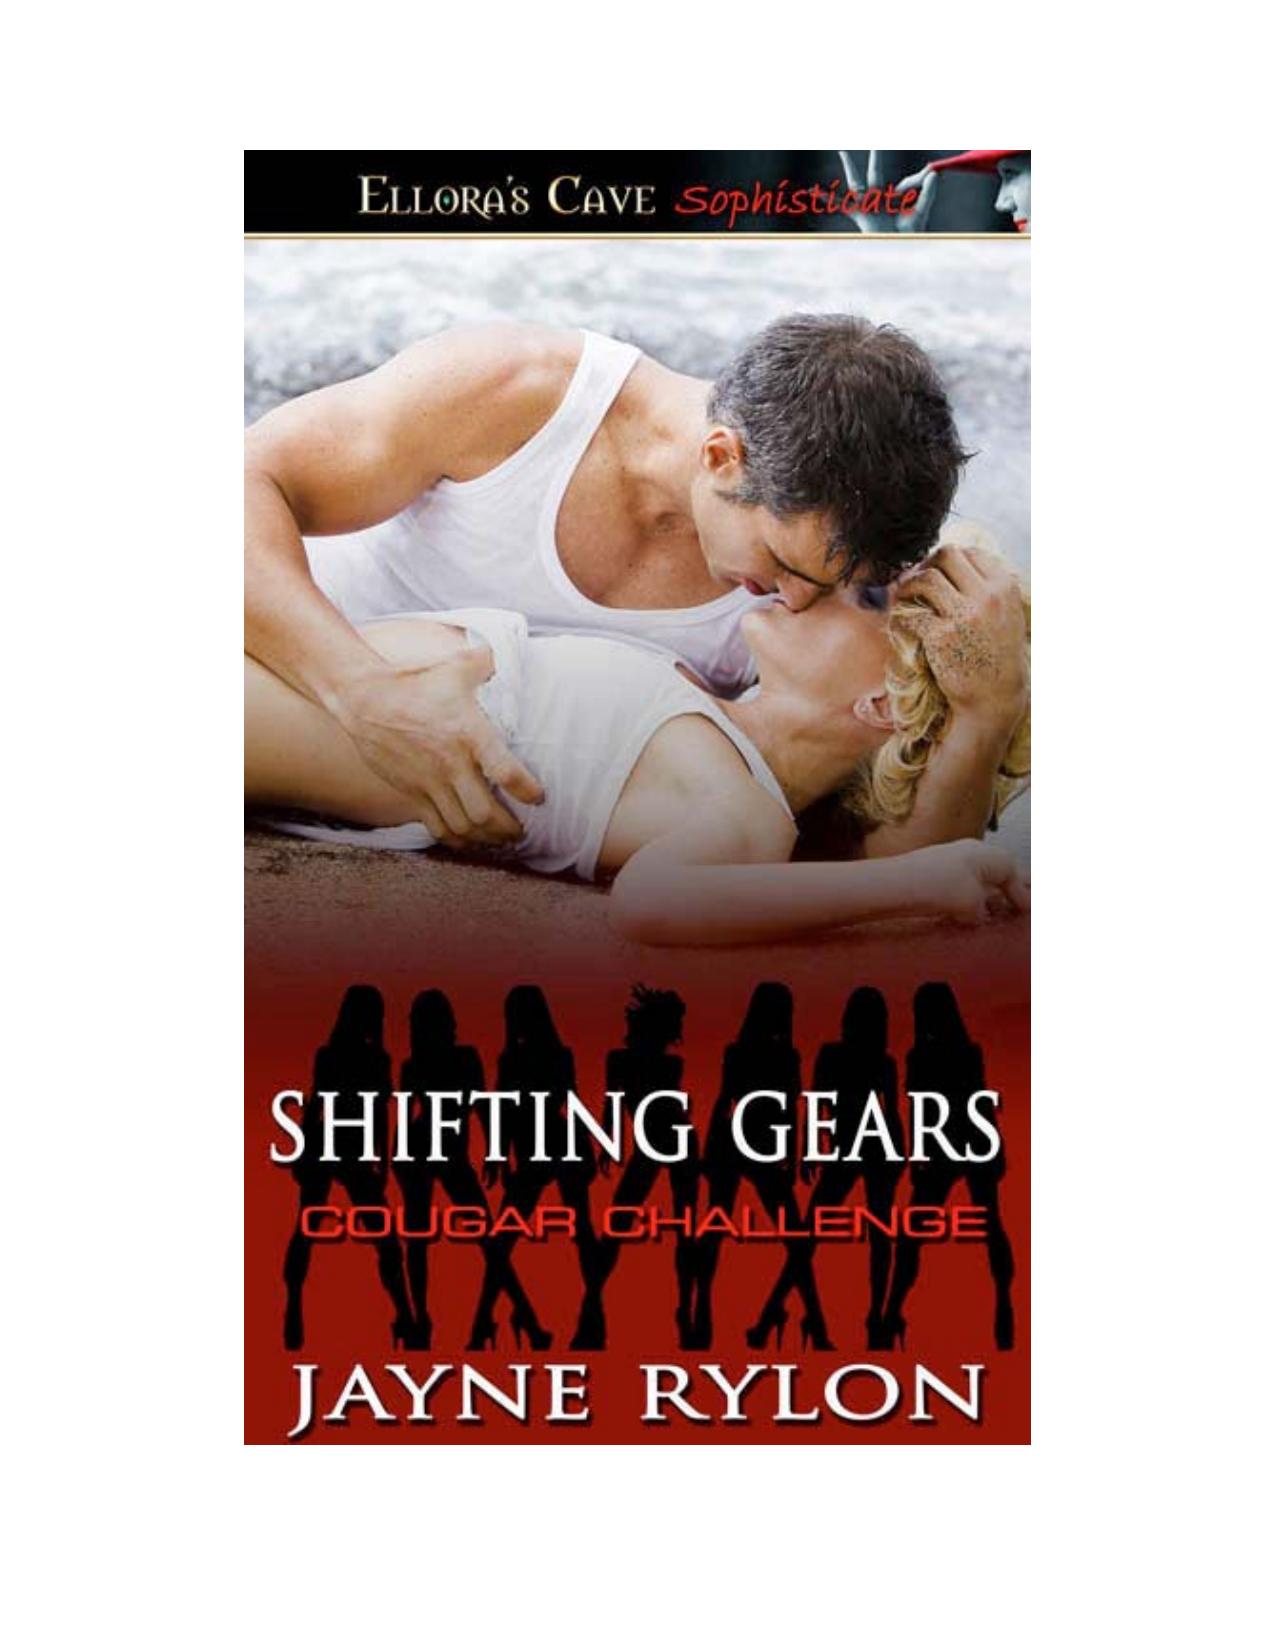 Shifting Gears by Jayne Rylon